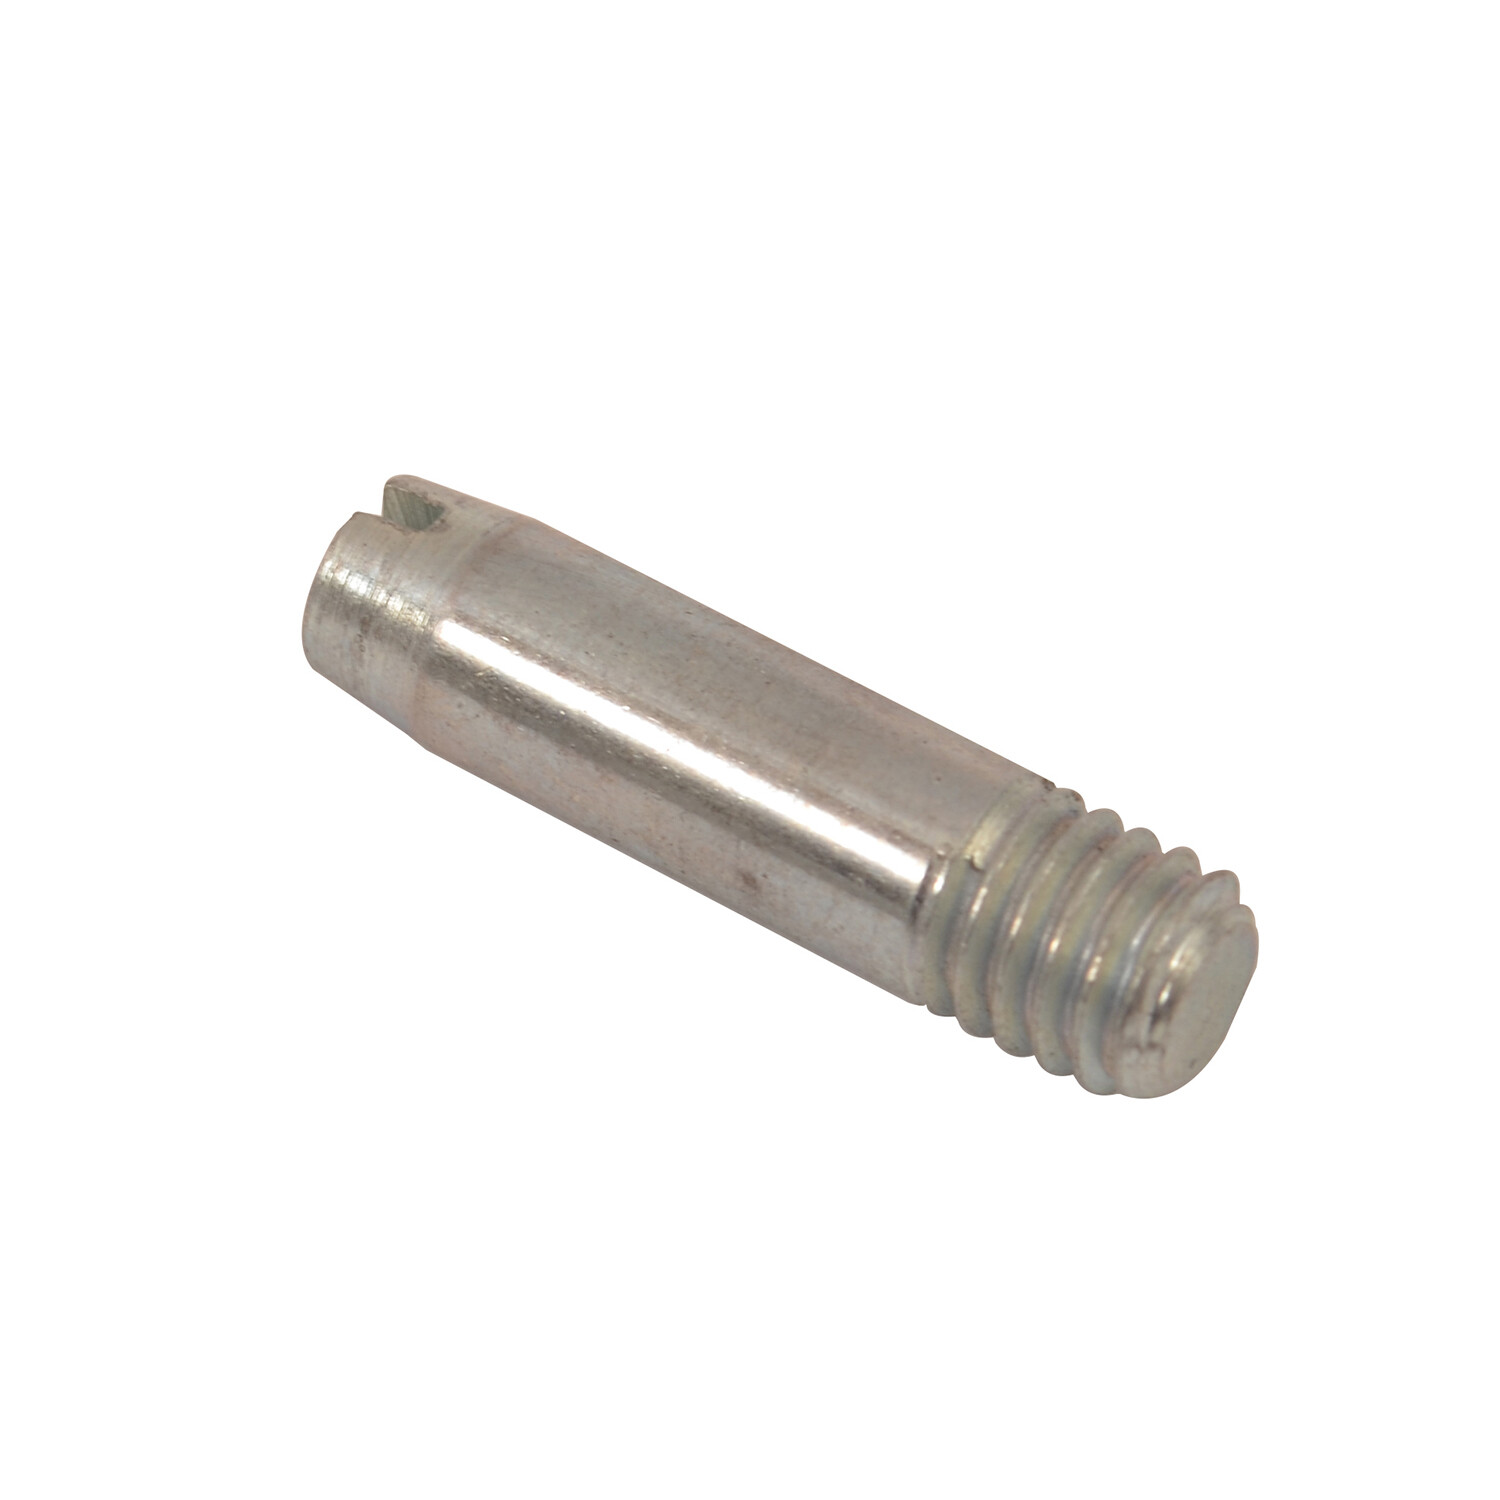 sparefixd Door Hinge Pin to Fit Hotpoint Fridge & Freezer C00281425 